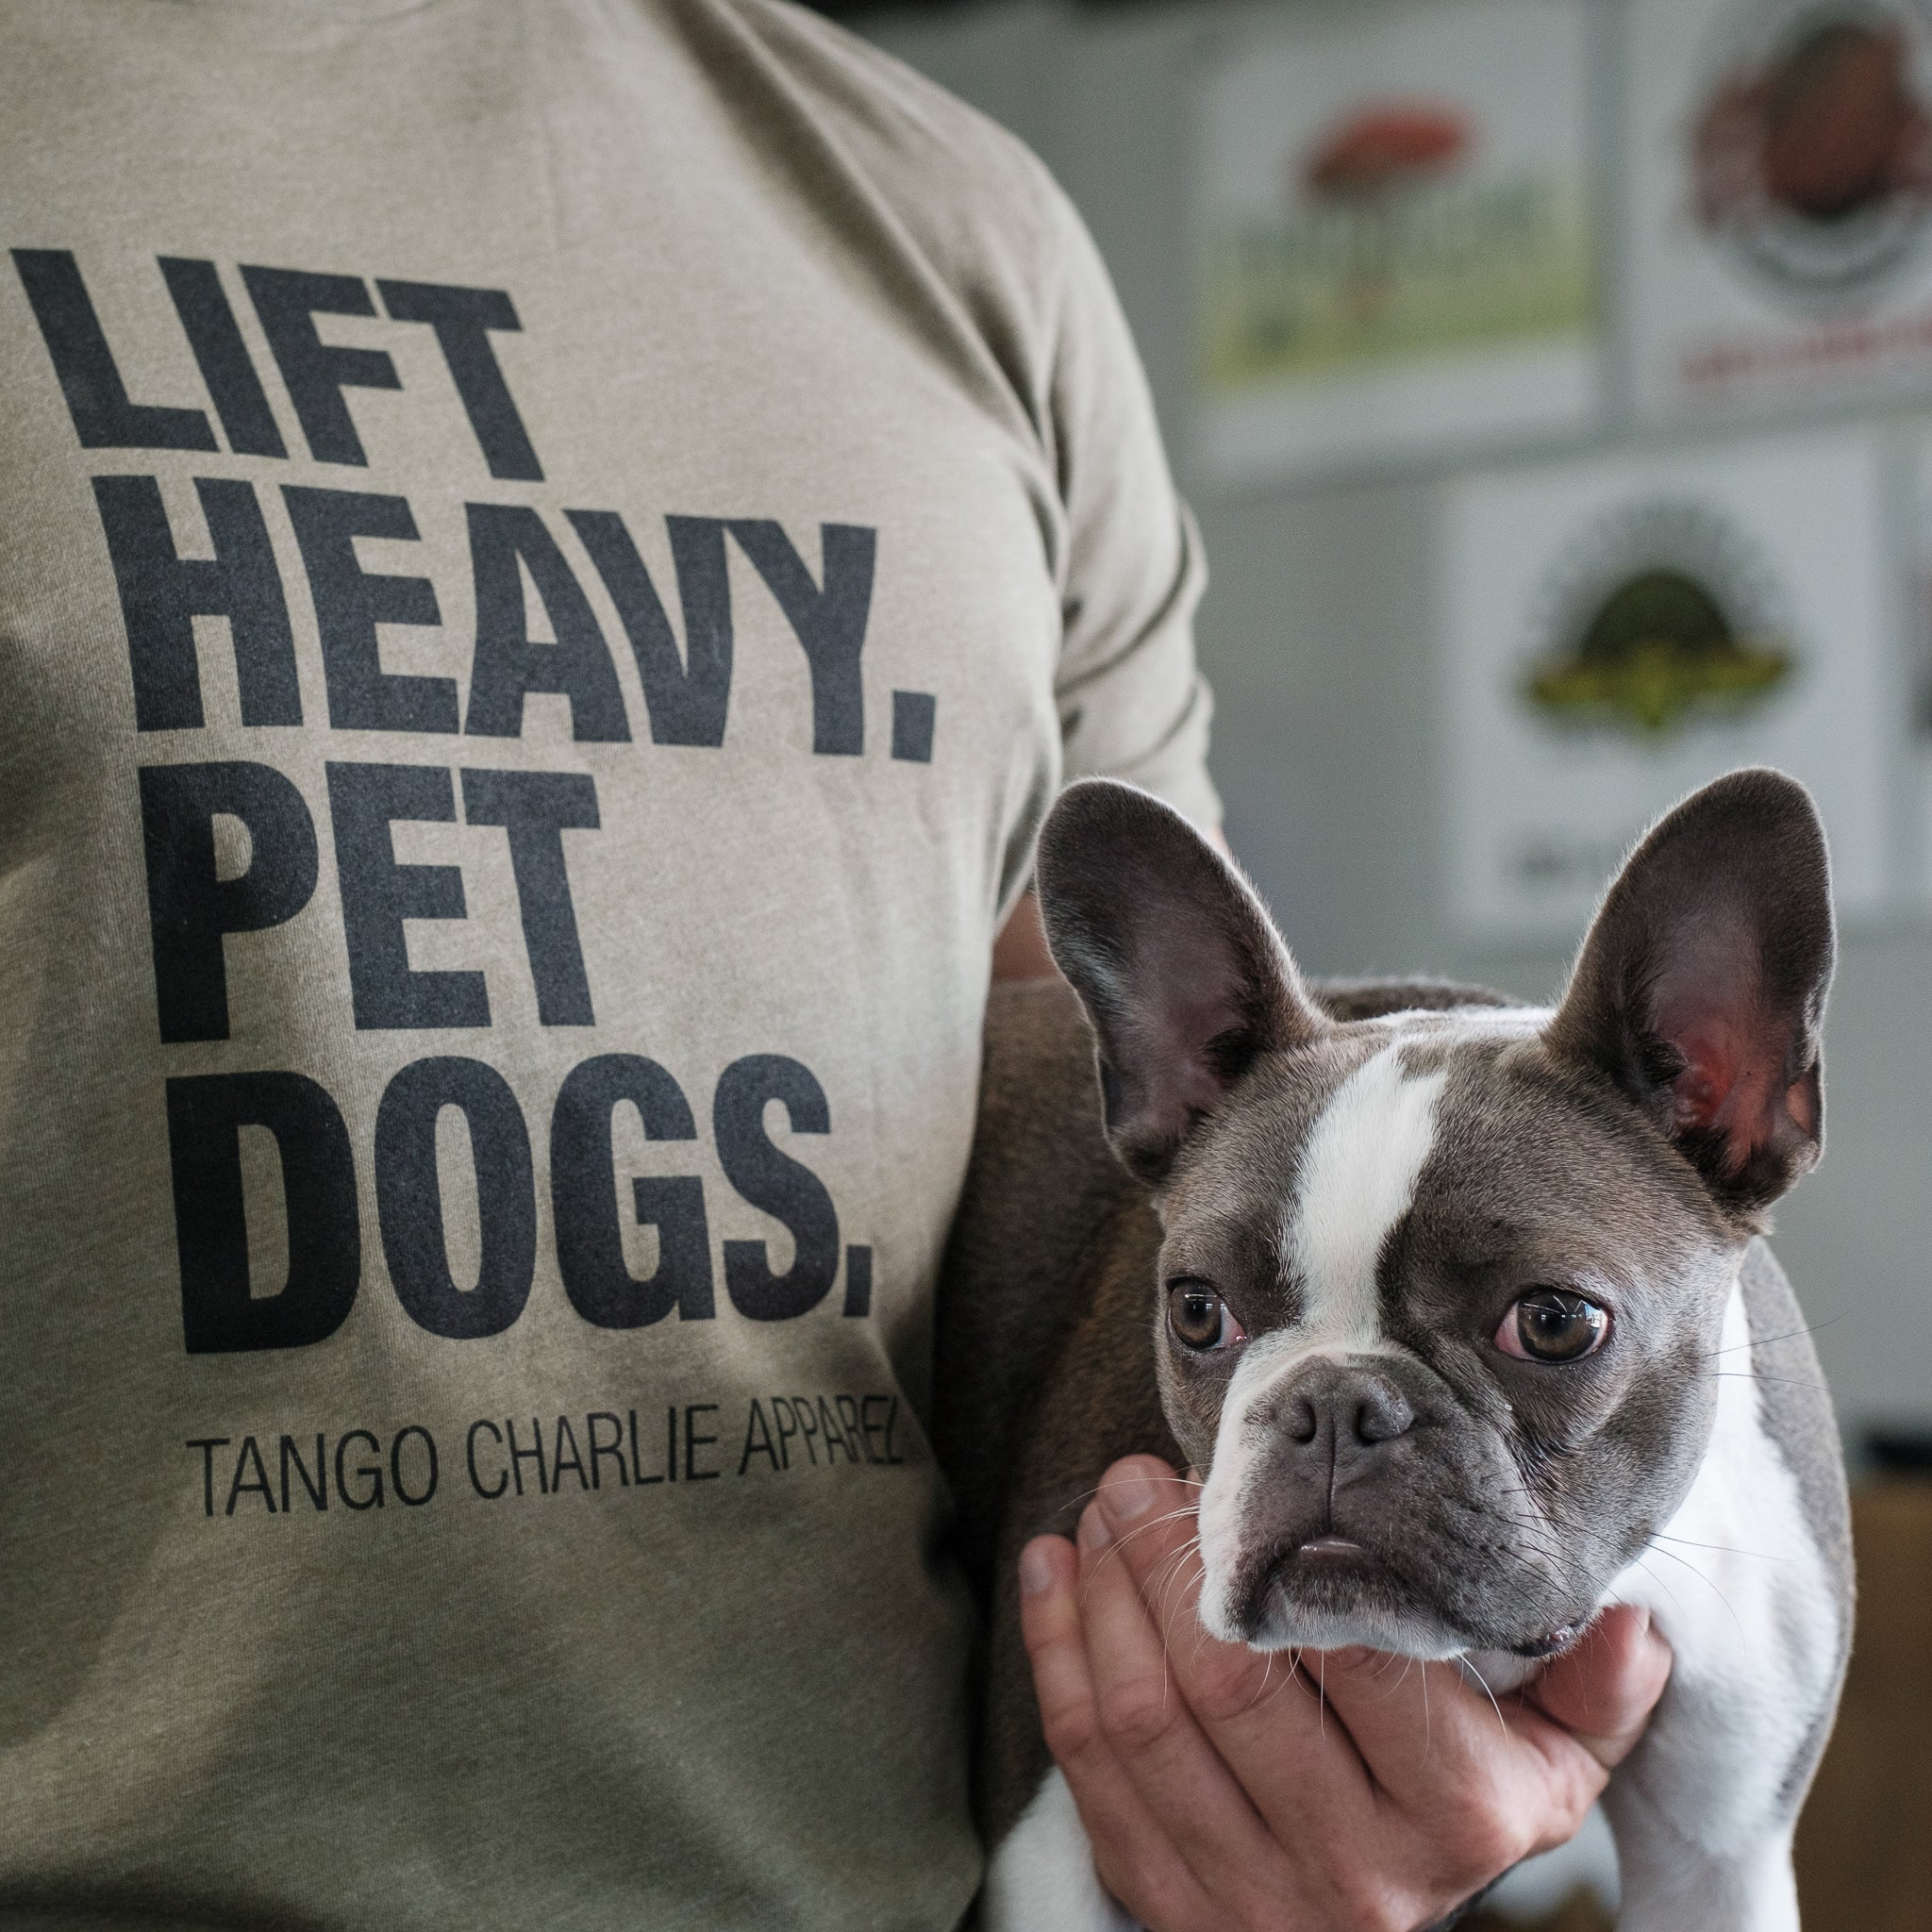 Lift Heavy. Pet Dogs. - Tee